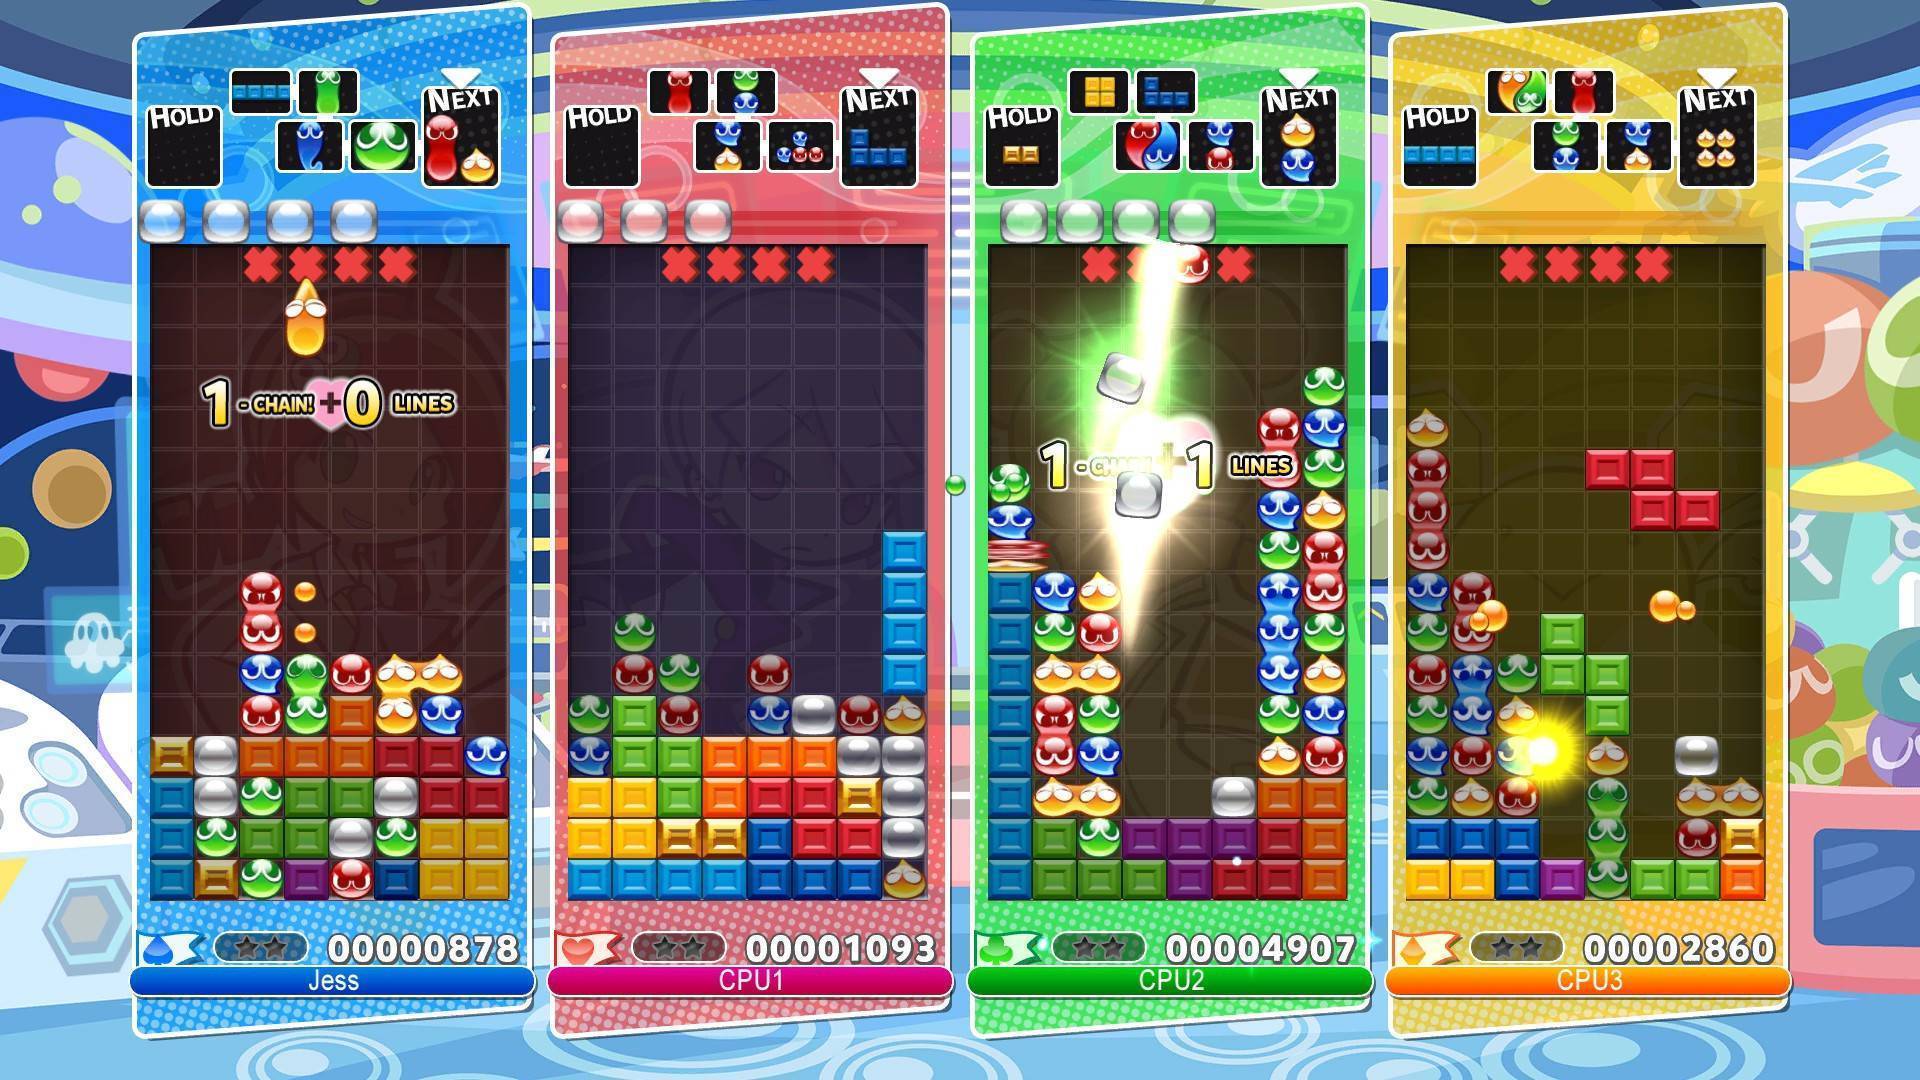 tetris 99 switch price